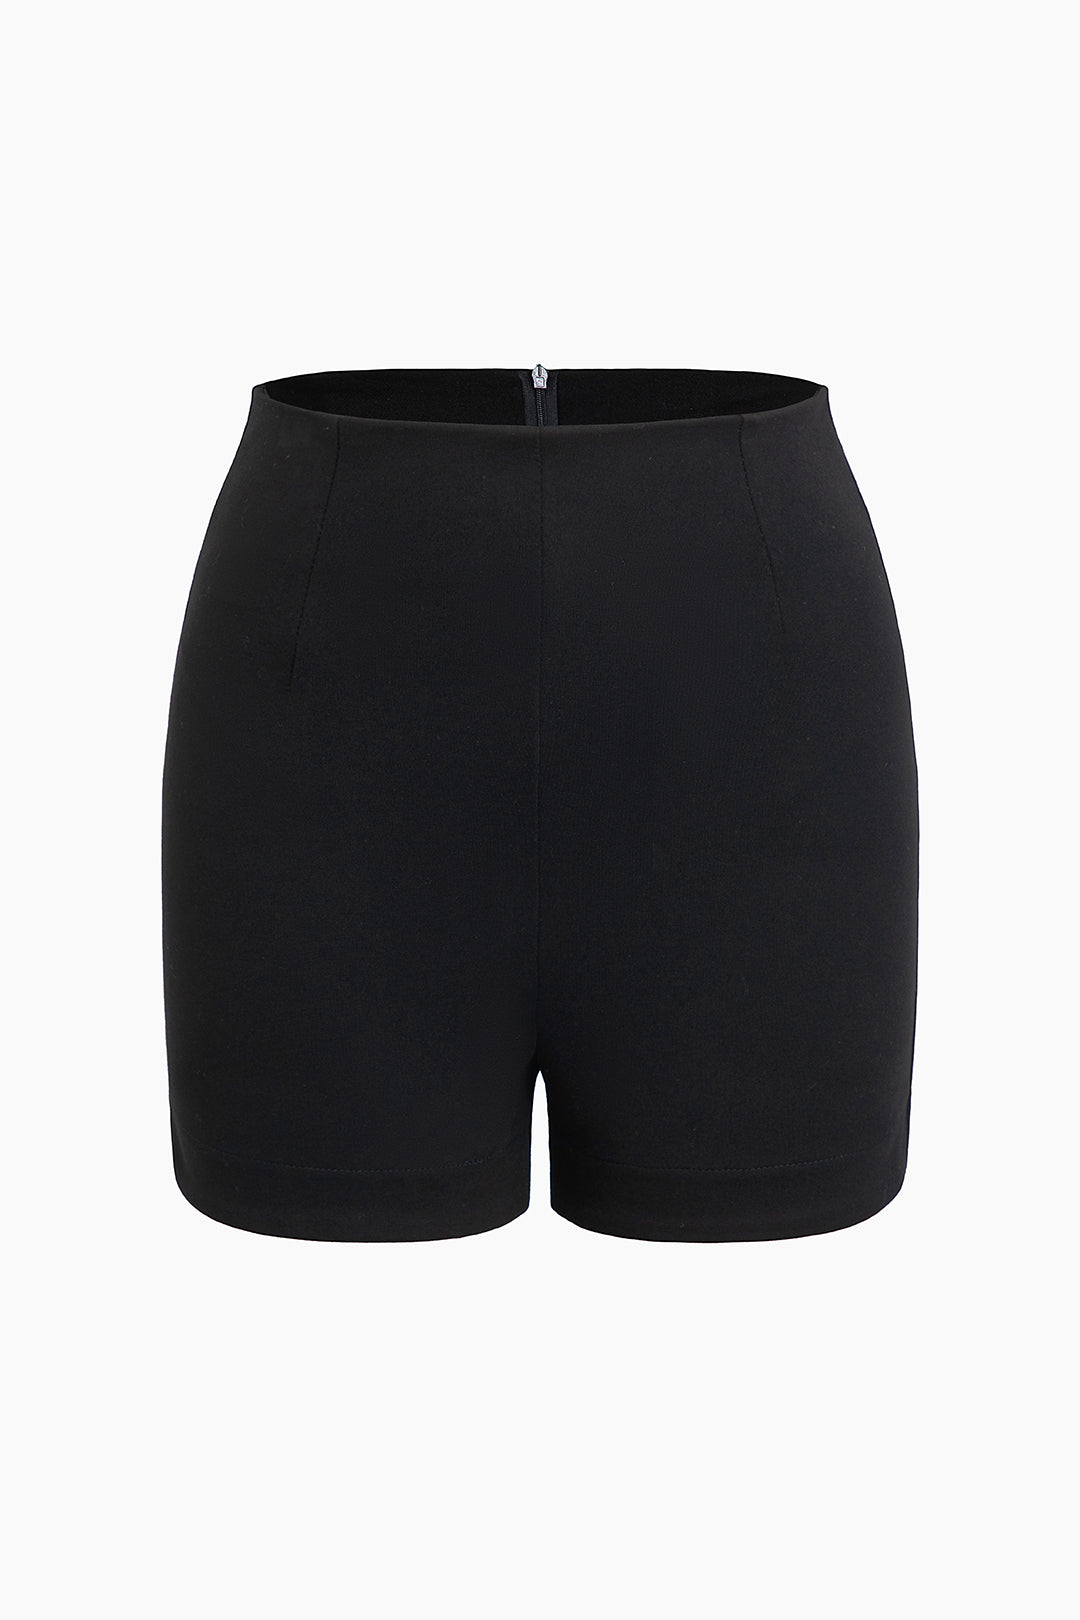 Basic Solid Slim Fit Zipper Shorts